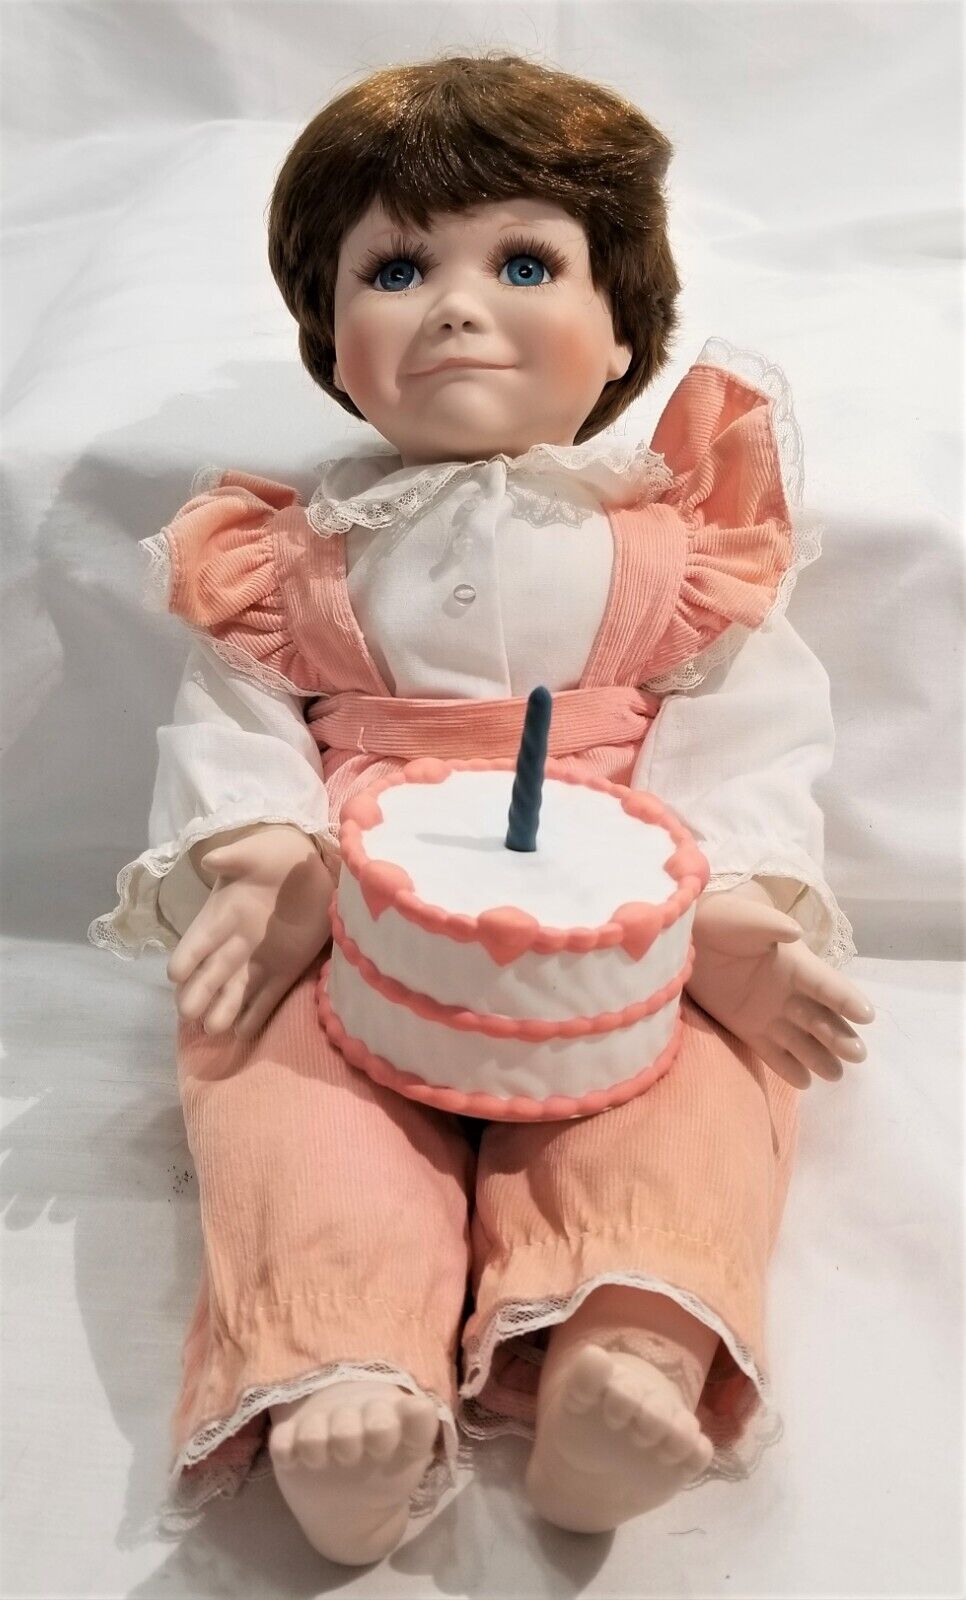 aubrey peterson share patty cake doll company photos